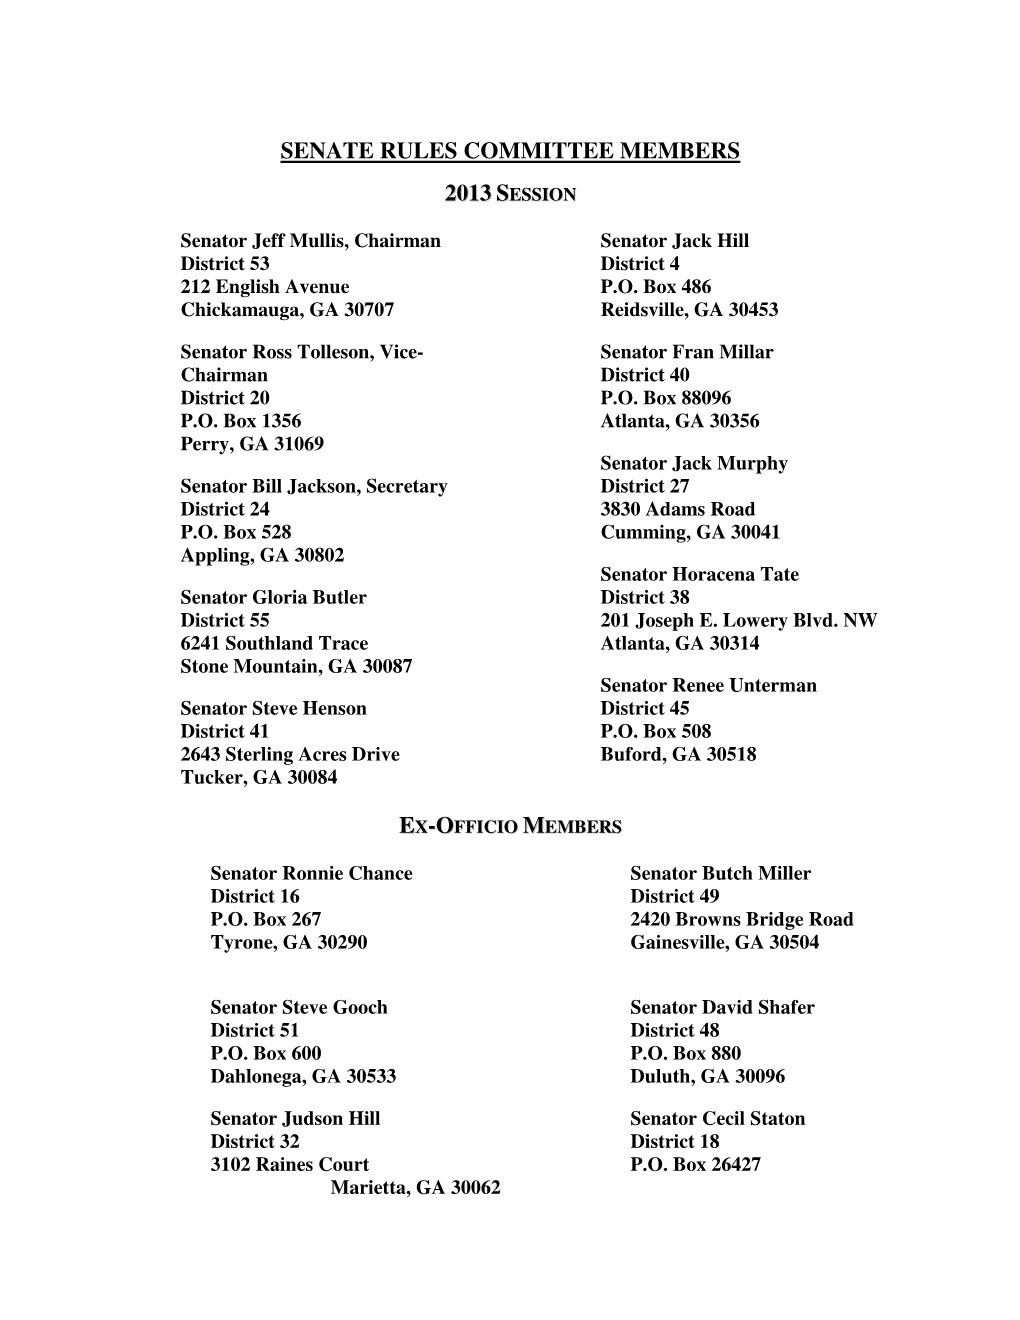 Senate Rules Committee Members 2013 S